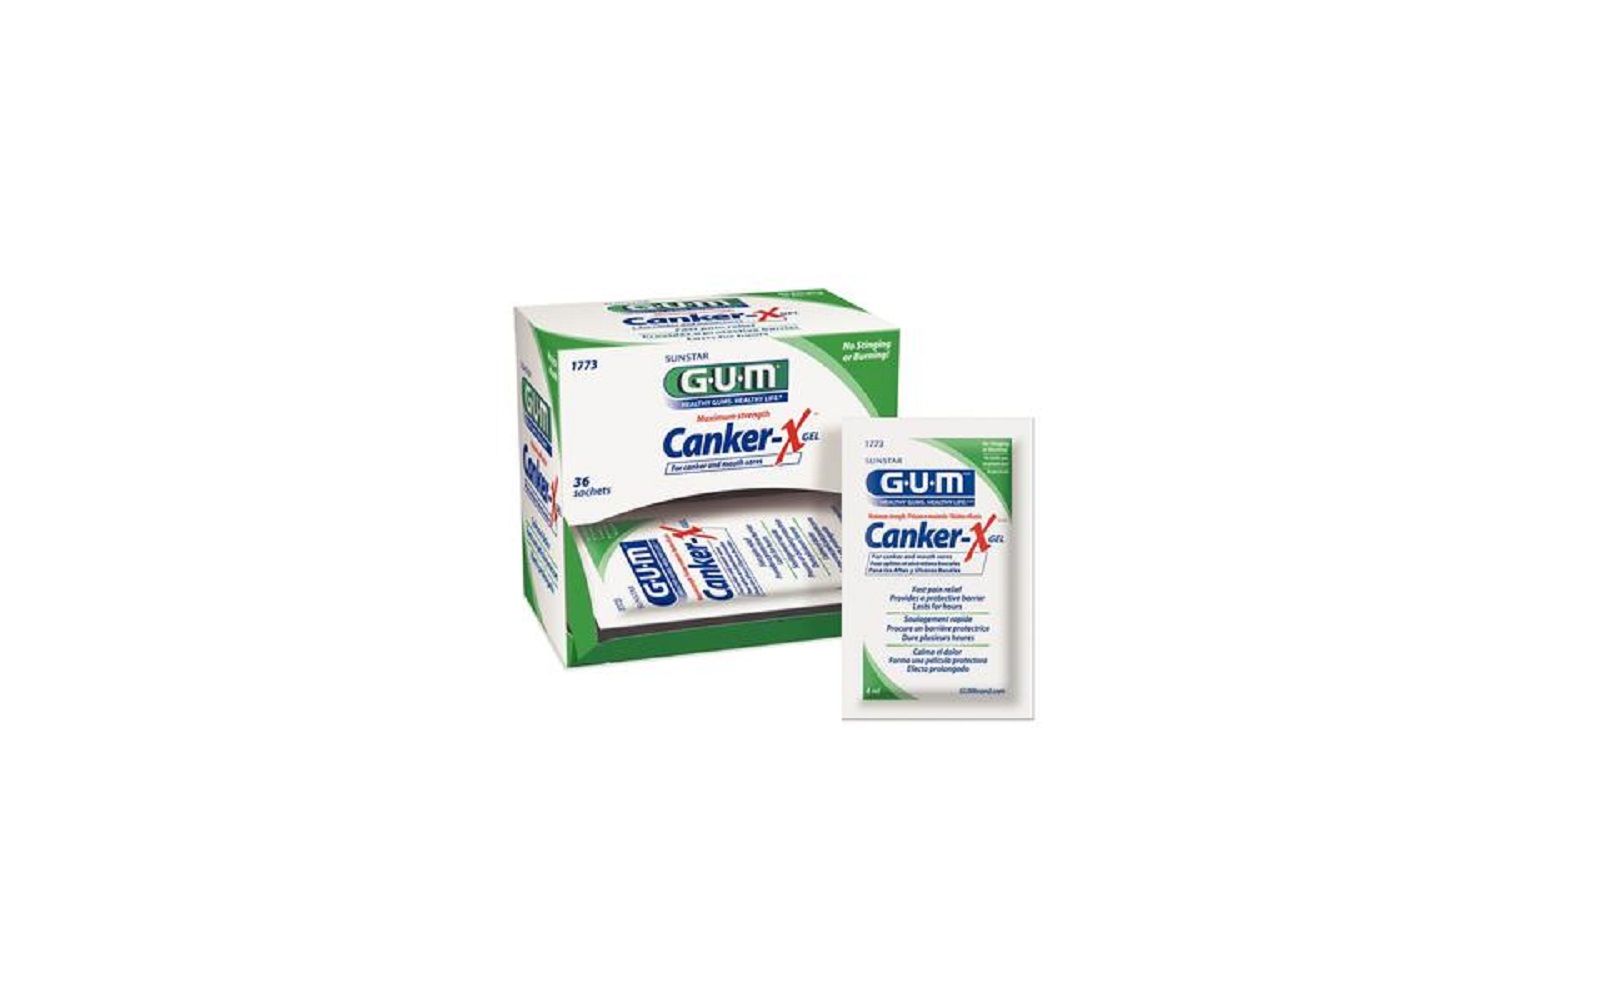 Gum® canker-x gel, 36 sachets